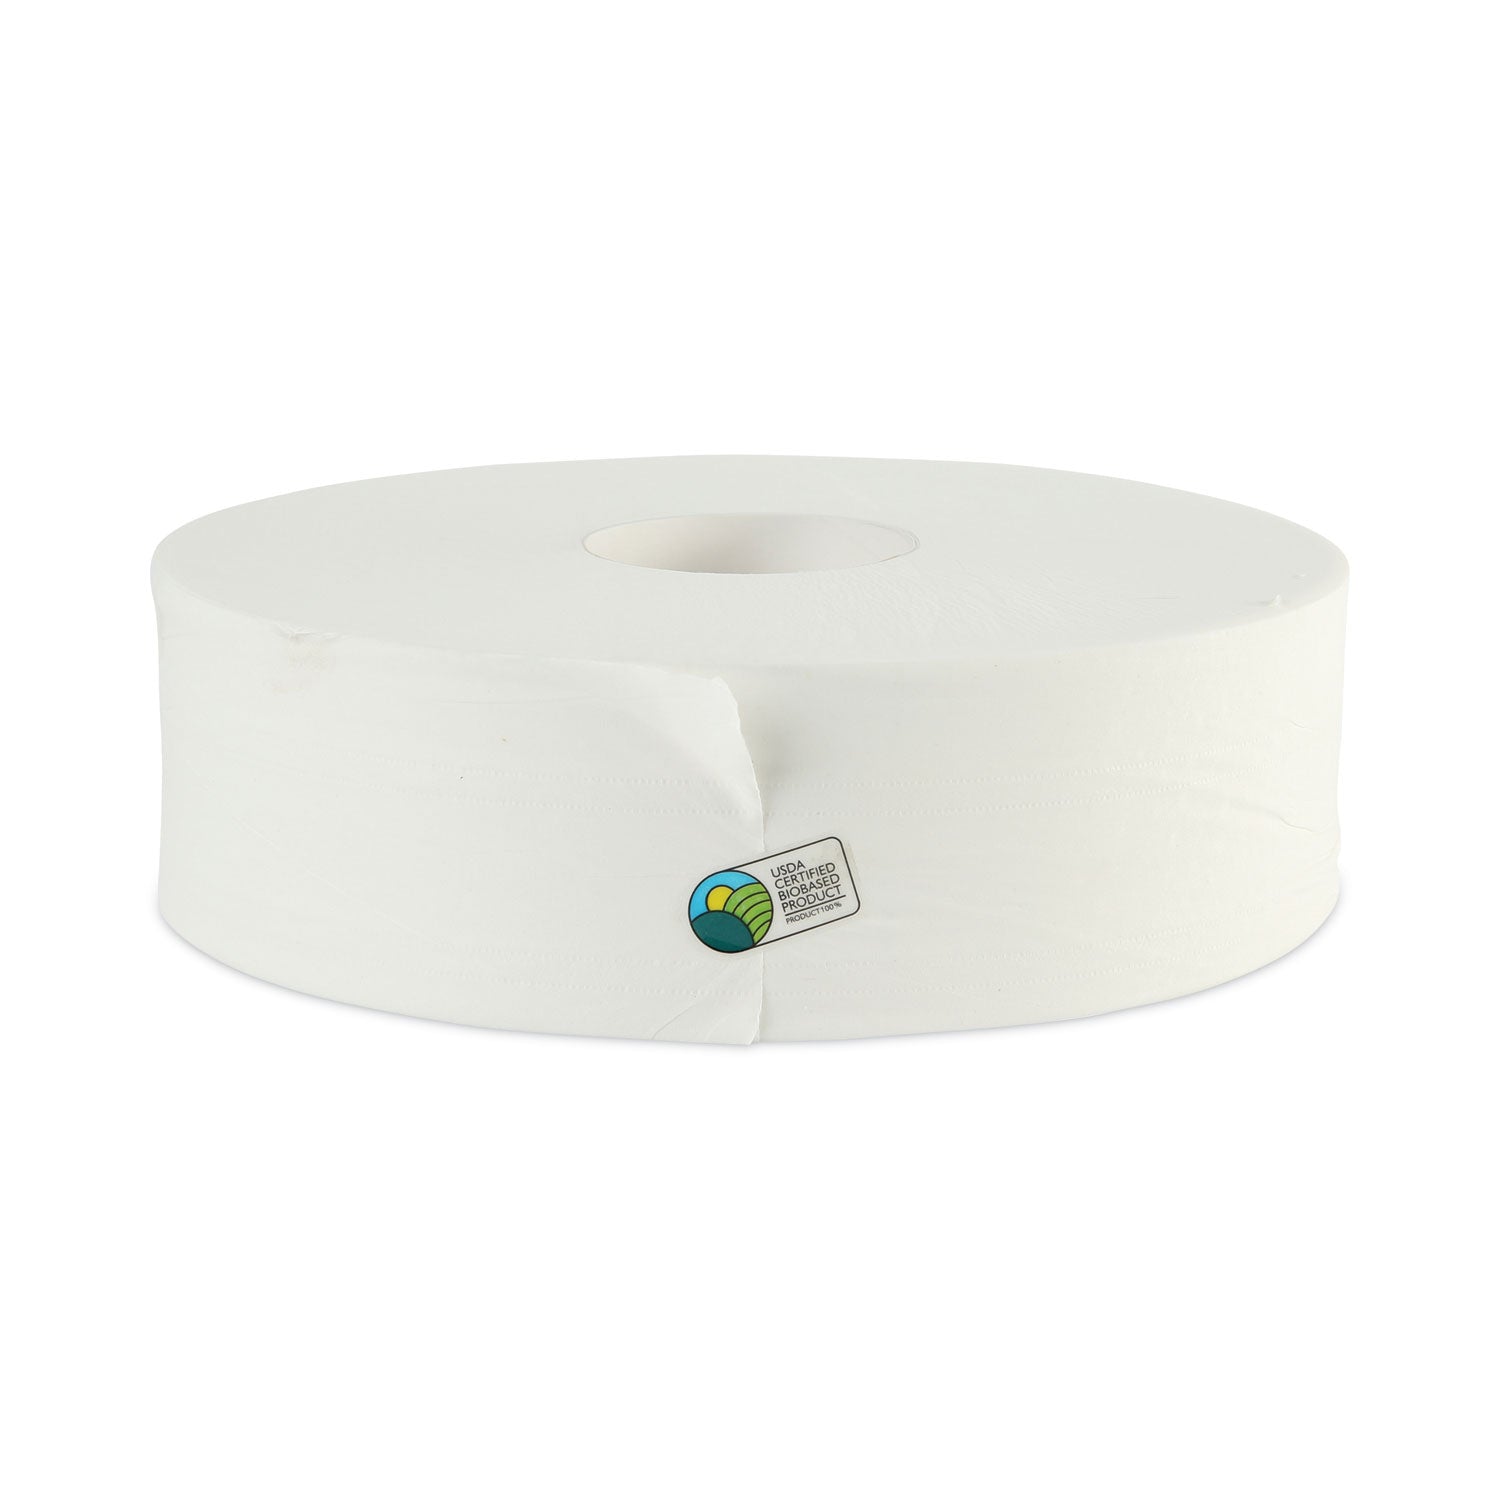 jrt-bath-tissue-jumbo-septic-safe-2-ply-white-35-x-2000-ft-12-dia-6-rolls-carton_bwk6102b - 2